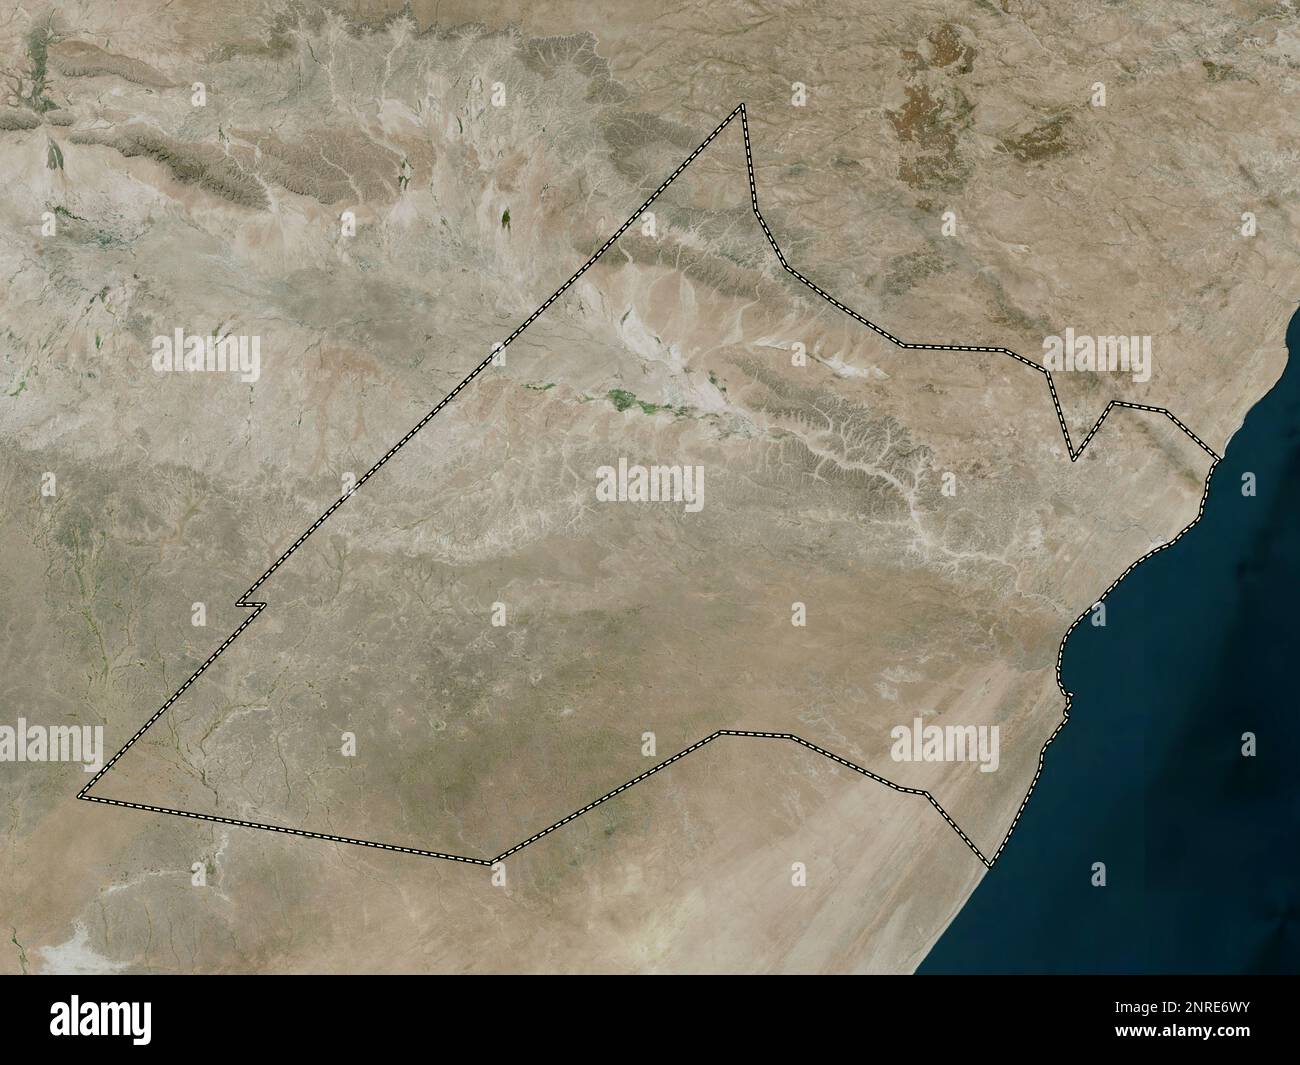 Nugaal, region of Somalia Mainland. High resolution satellite map Stock Photo